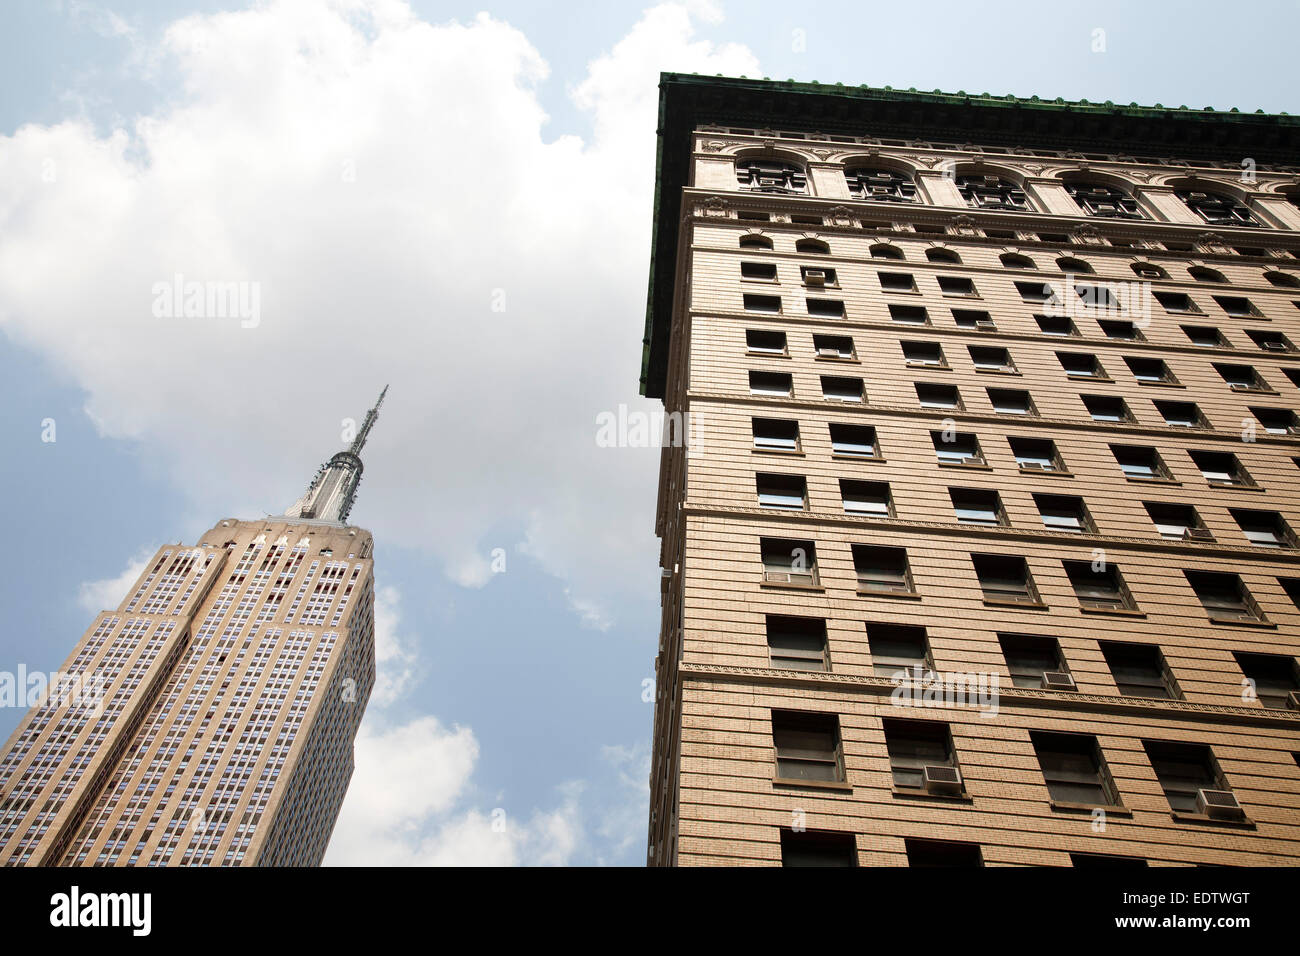 Empire state building, Manhattan, New York, USA, Amérique Latine Banque D'Images